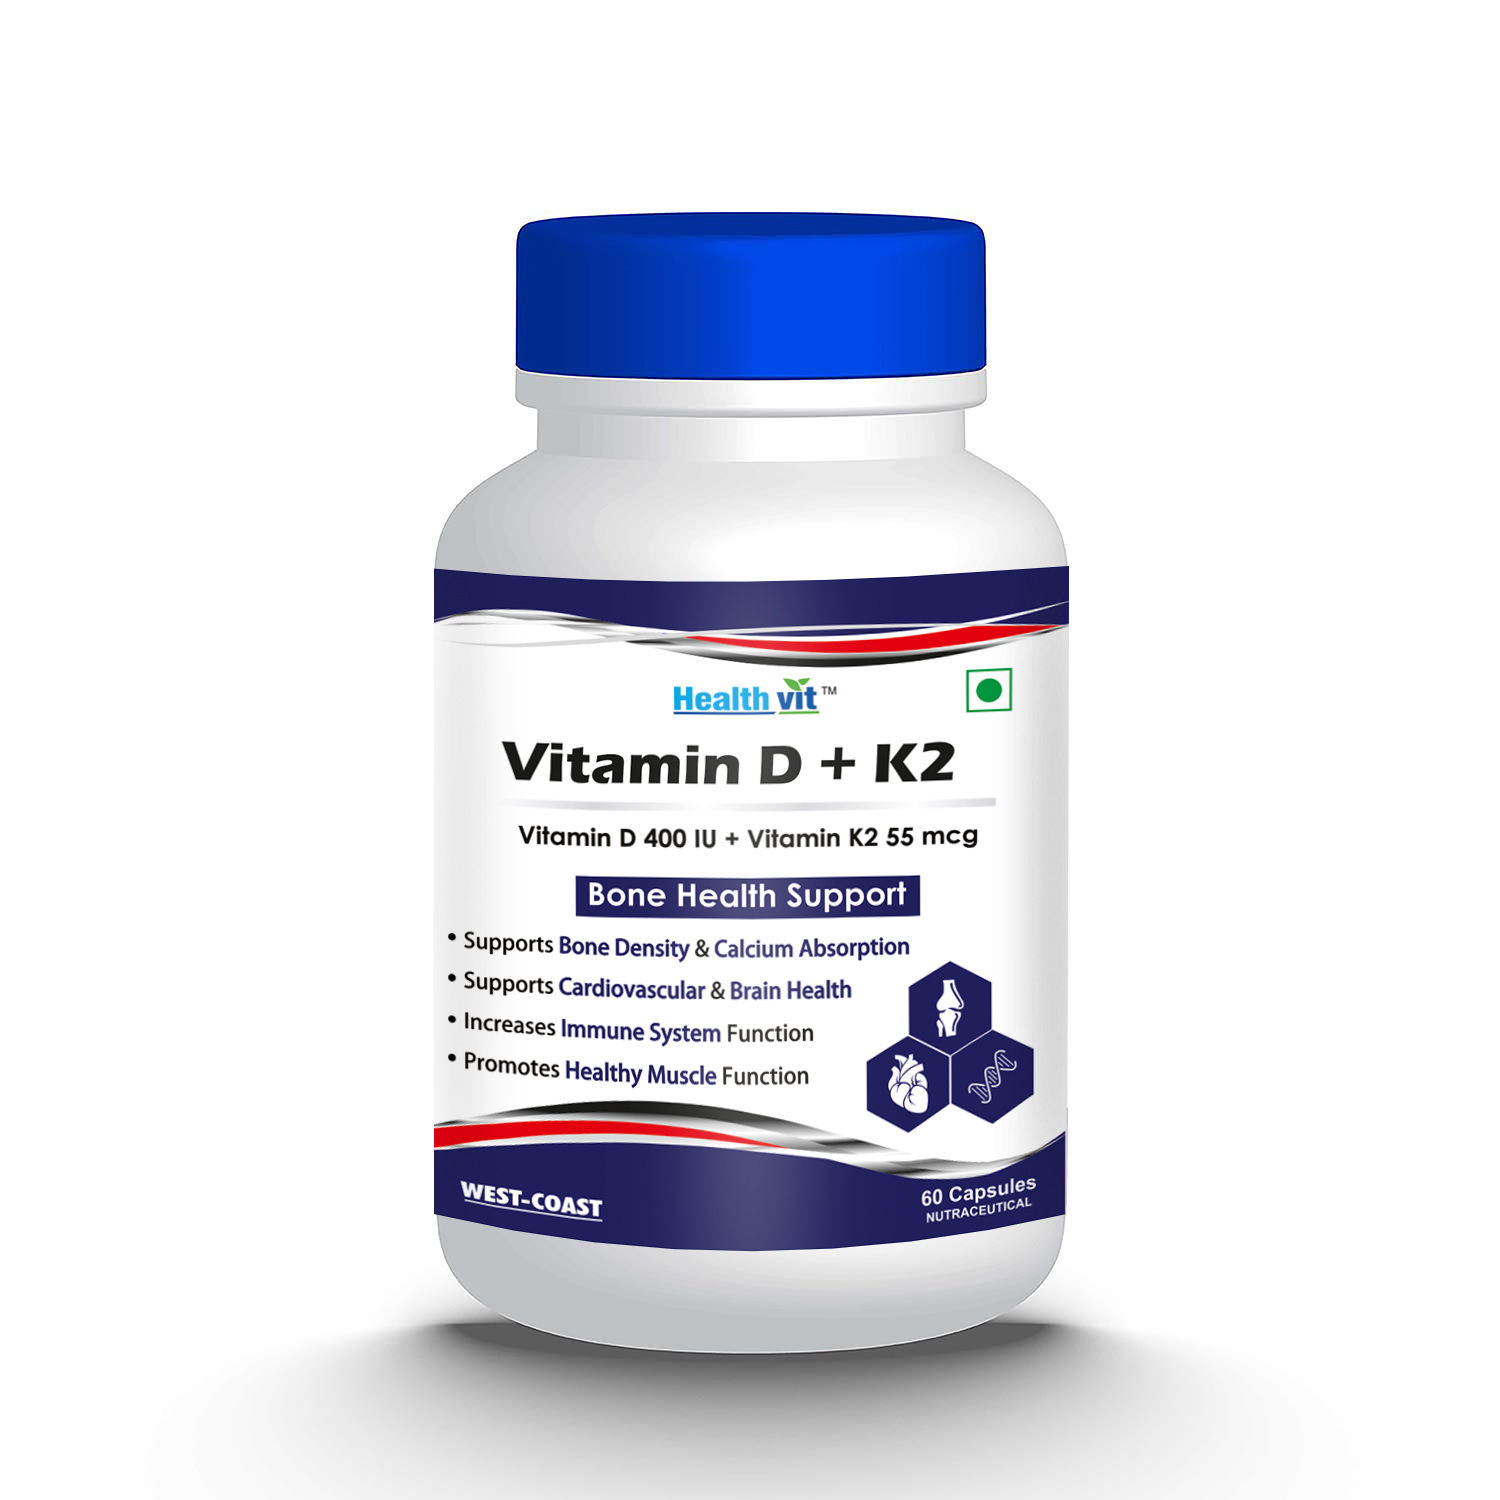 Healthvit Vitamin D 400 IU with Vitamin K2 55mcg for Bone Health Support- 60 Capsules